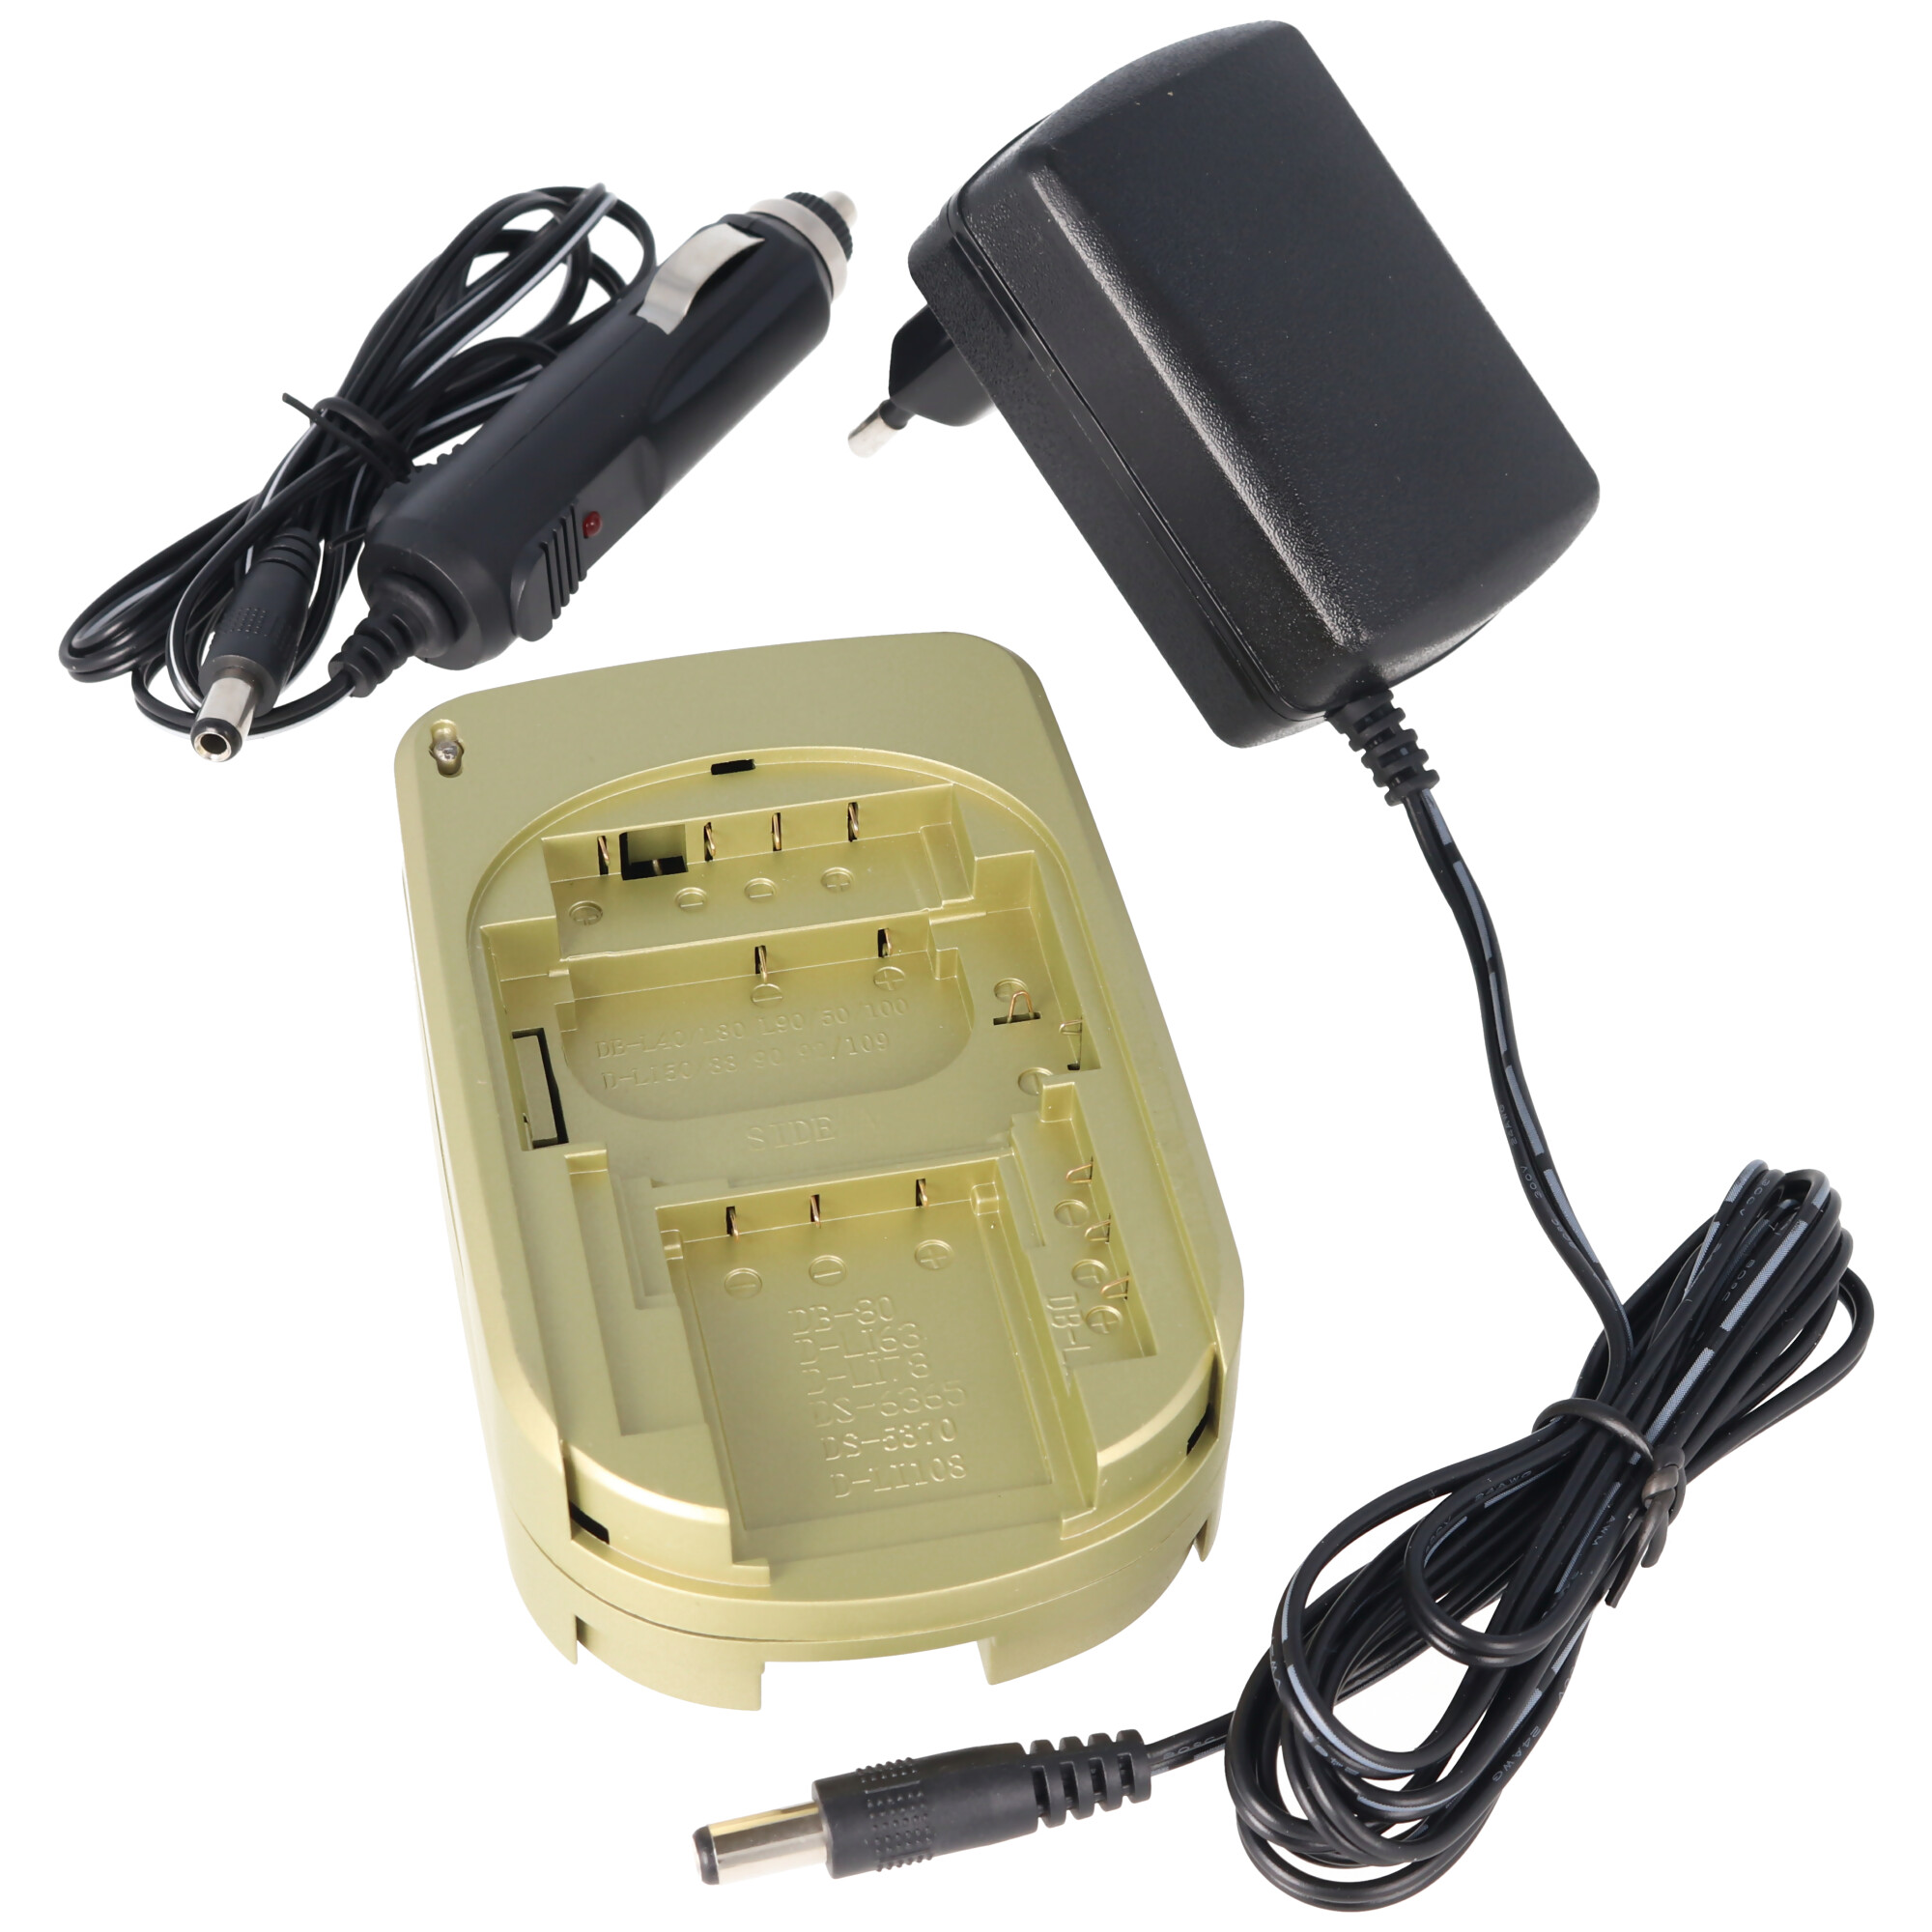 Double-side charger für Digital-Kamera und Camcorder Li-ion Akku, PEN, RIC, Sanyo